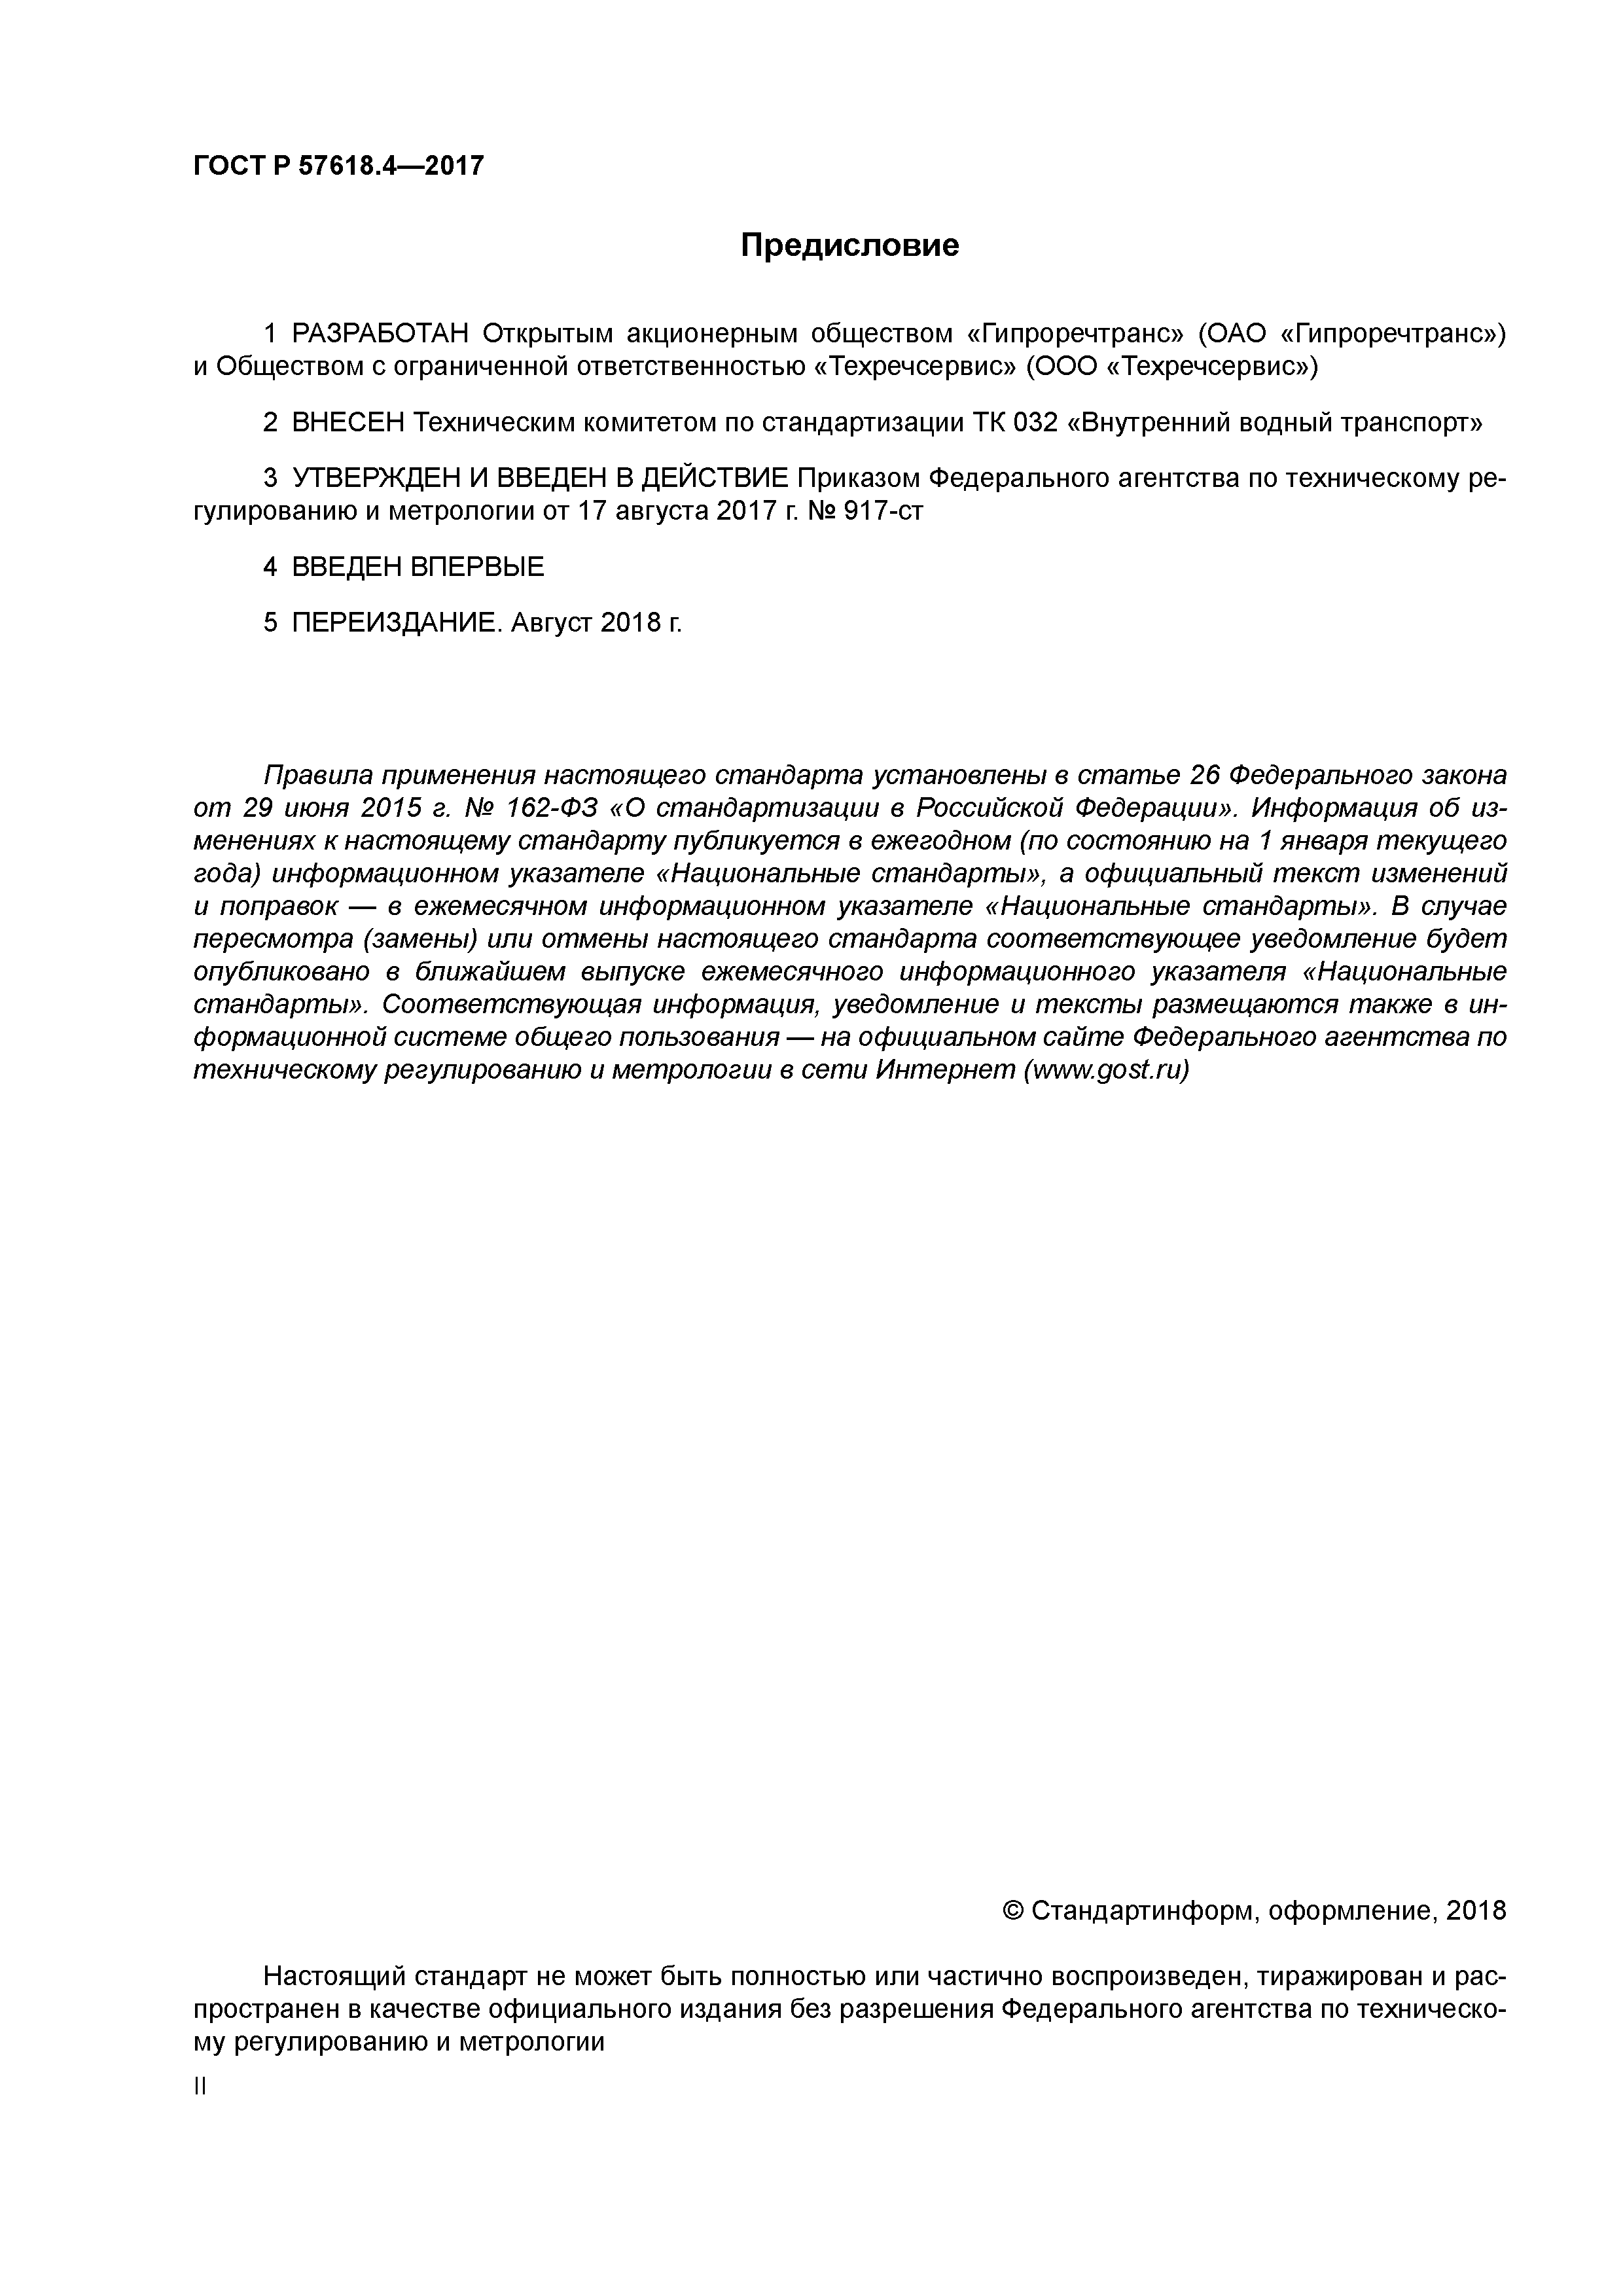 ГОСТ Р 57618.4-2017